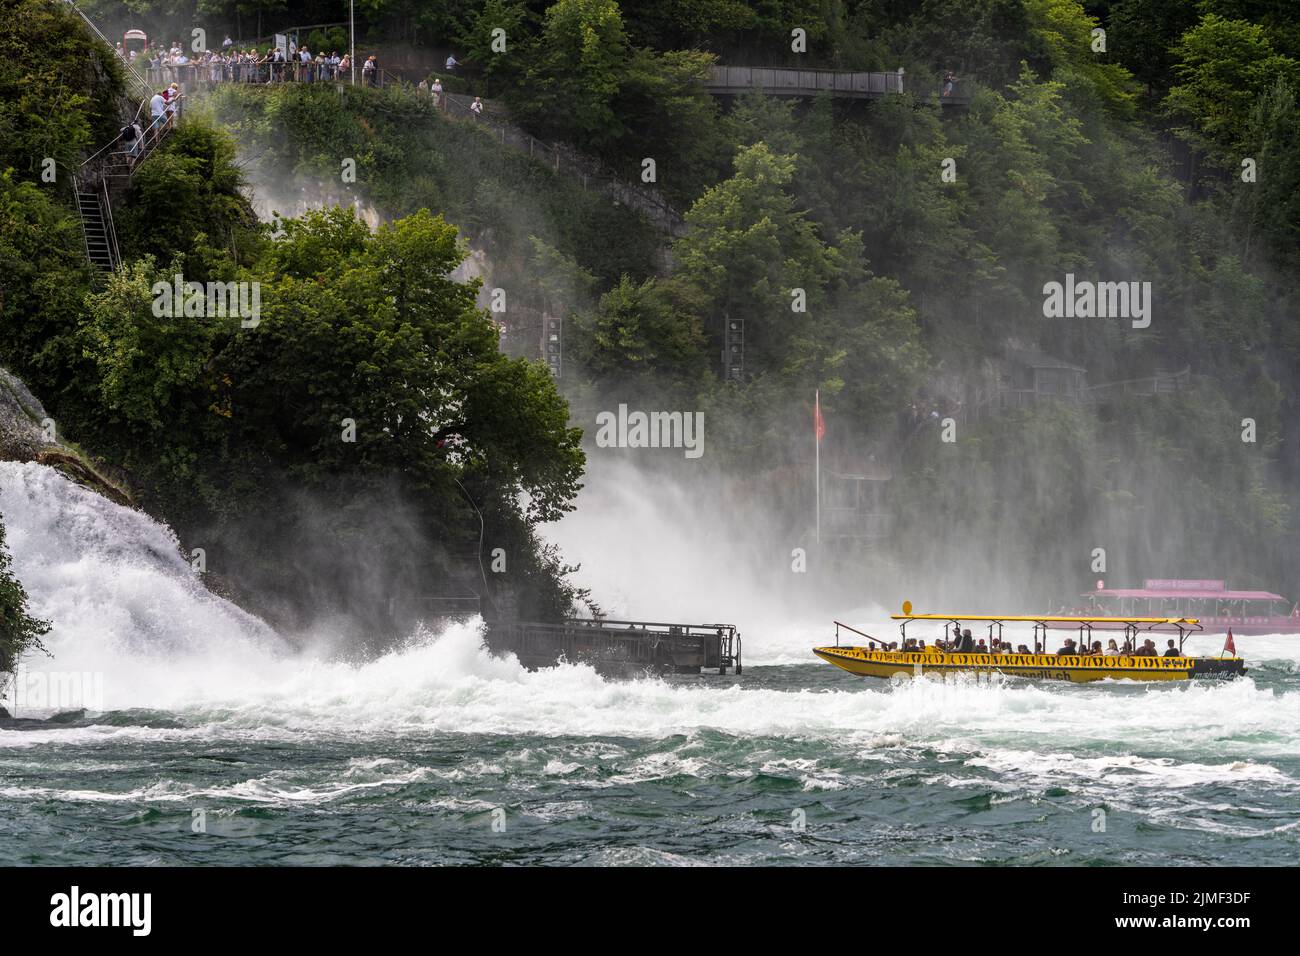 Aussflugsboot bei der Anfahrt zum Wasserfall Rheinfall bei Neuhausen am Rheinfall, Schweiz, Europa | Excursión en barco cerca de las cataratas del Rin, Neuh Foto de stock